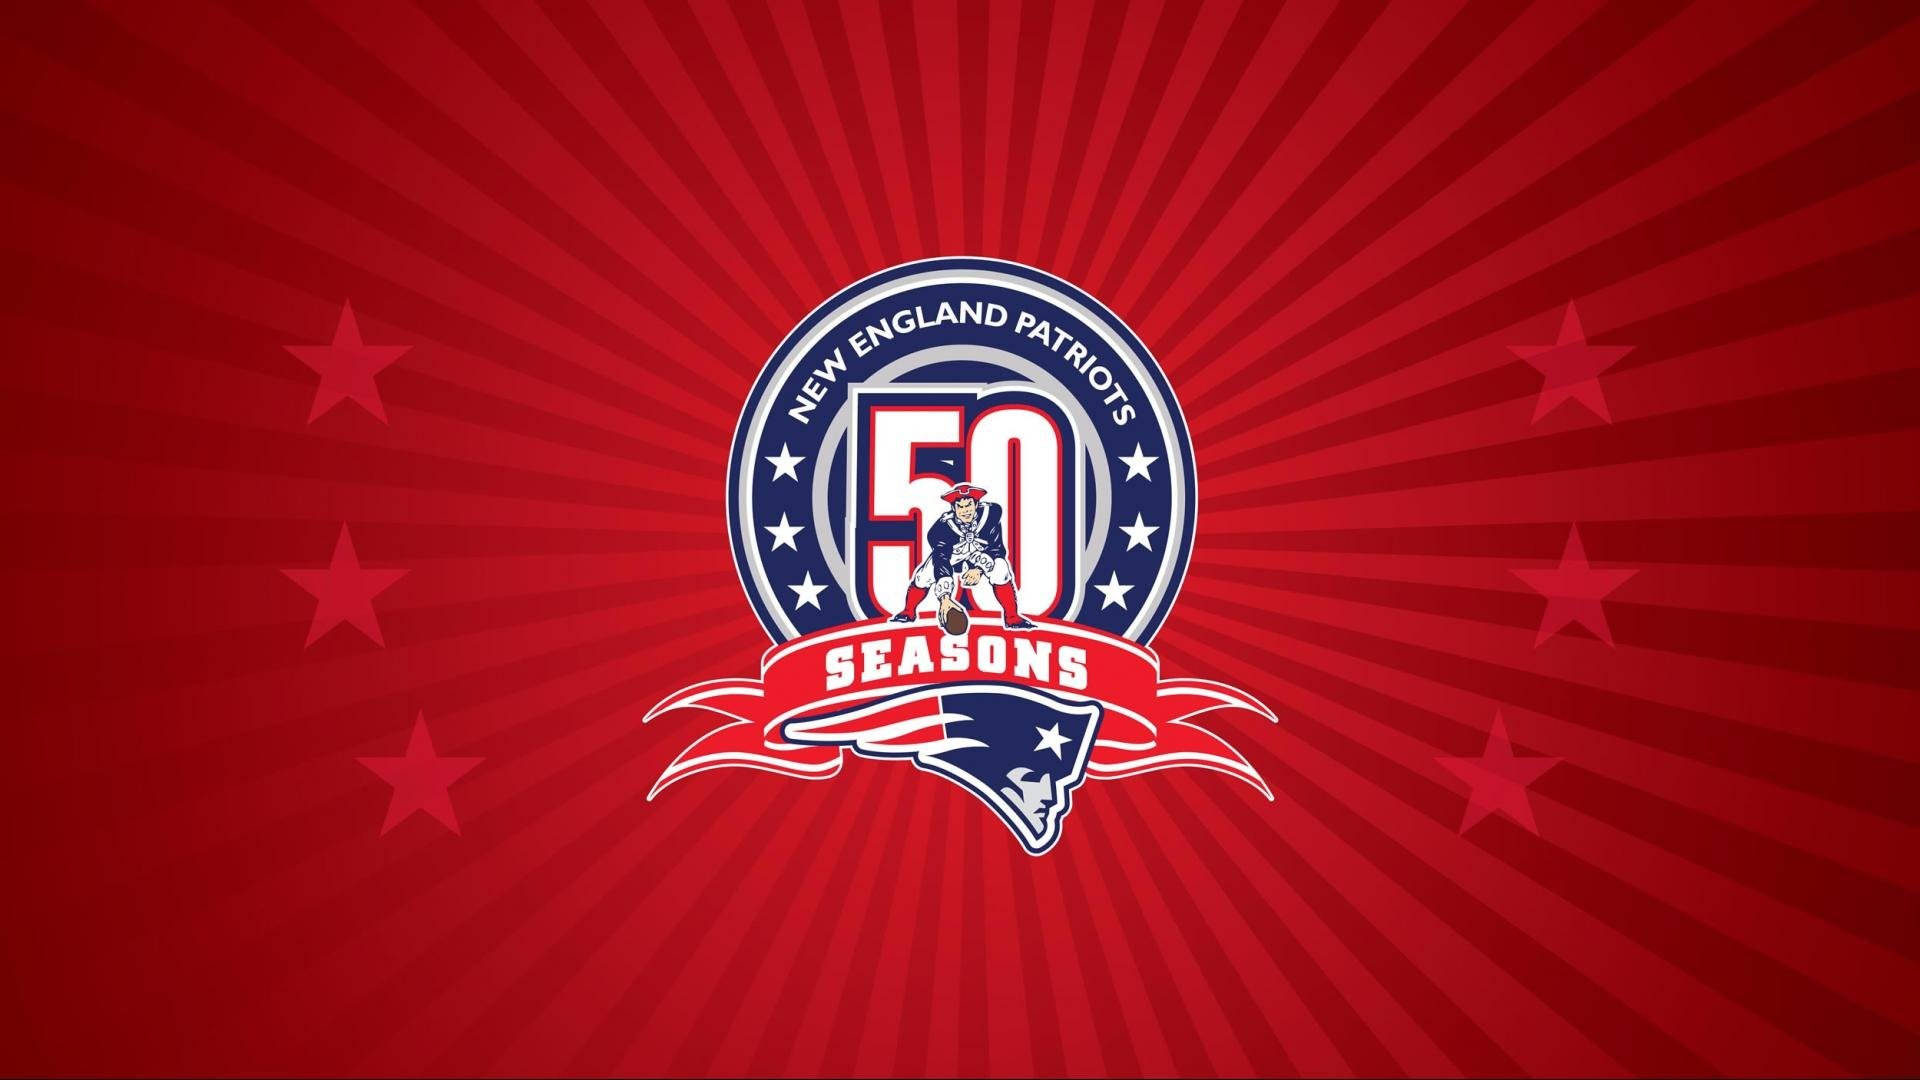 Patriots Logo 50 Seasons In Nfl